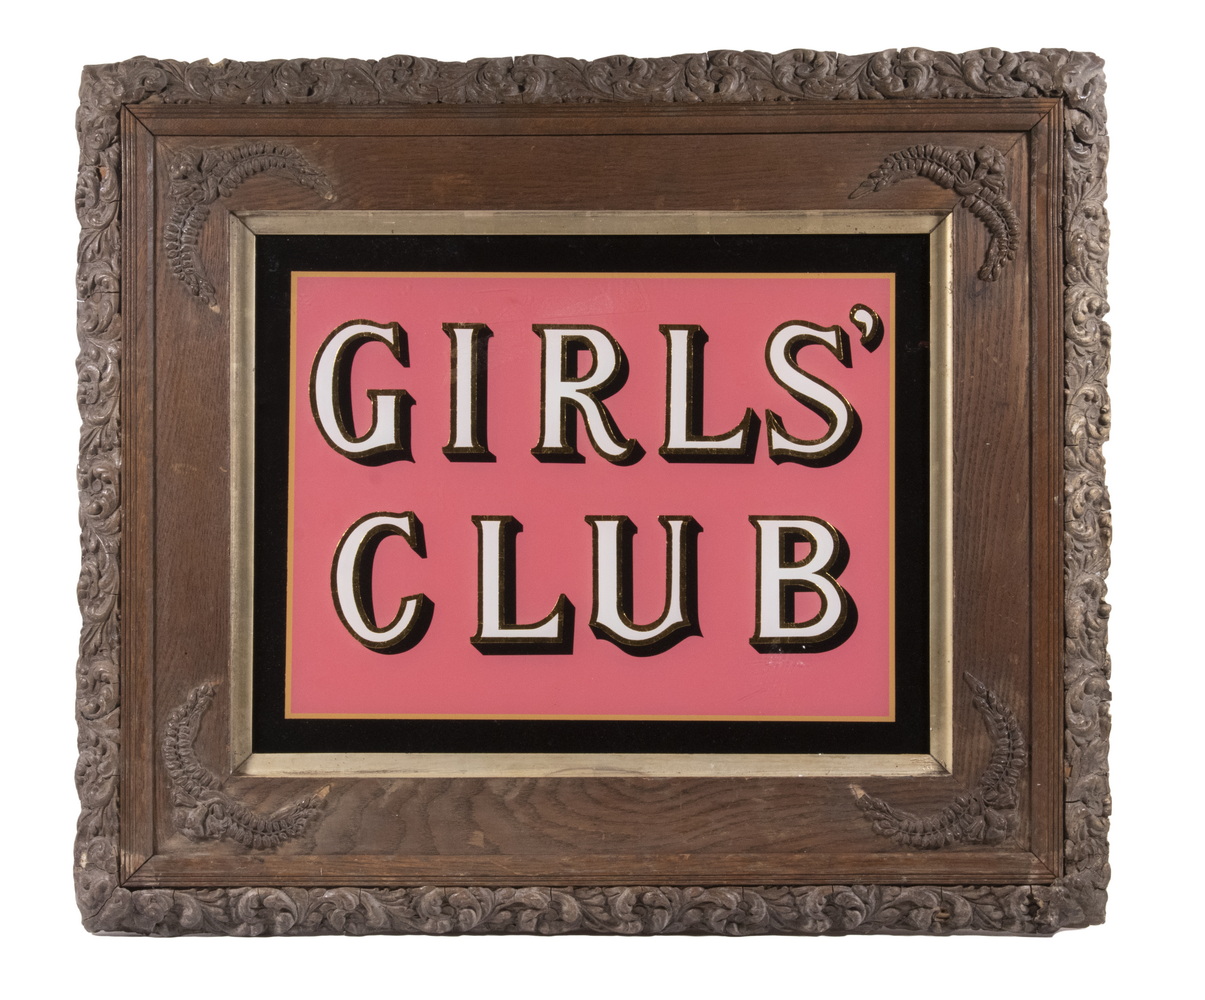 "GIRLS' CLUB" SIGN Reverse Glass